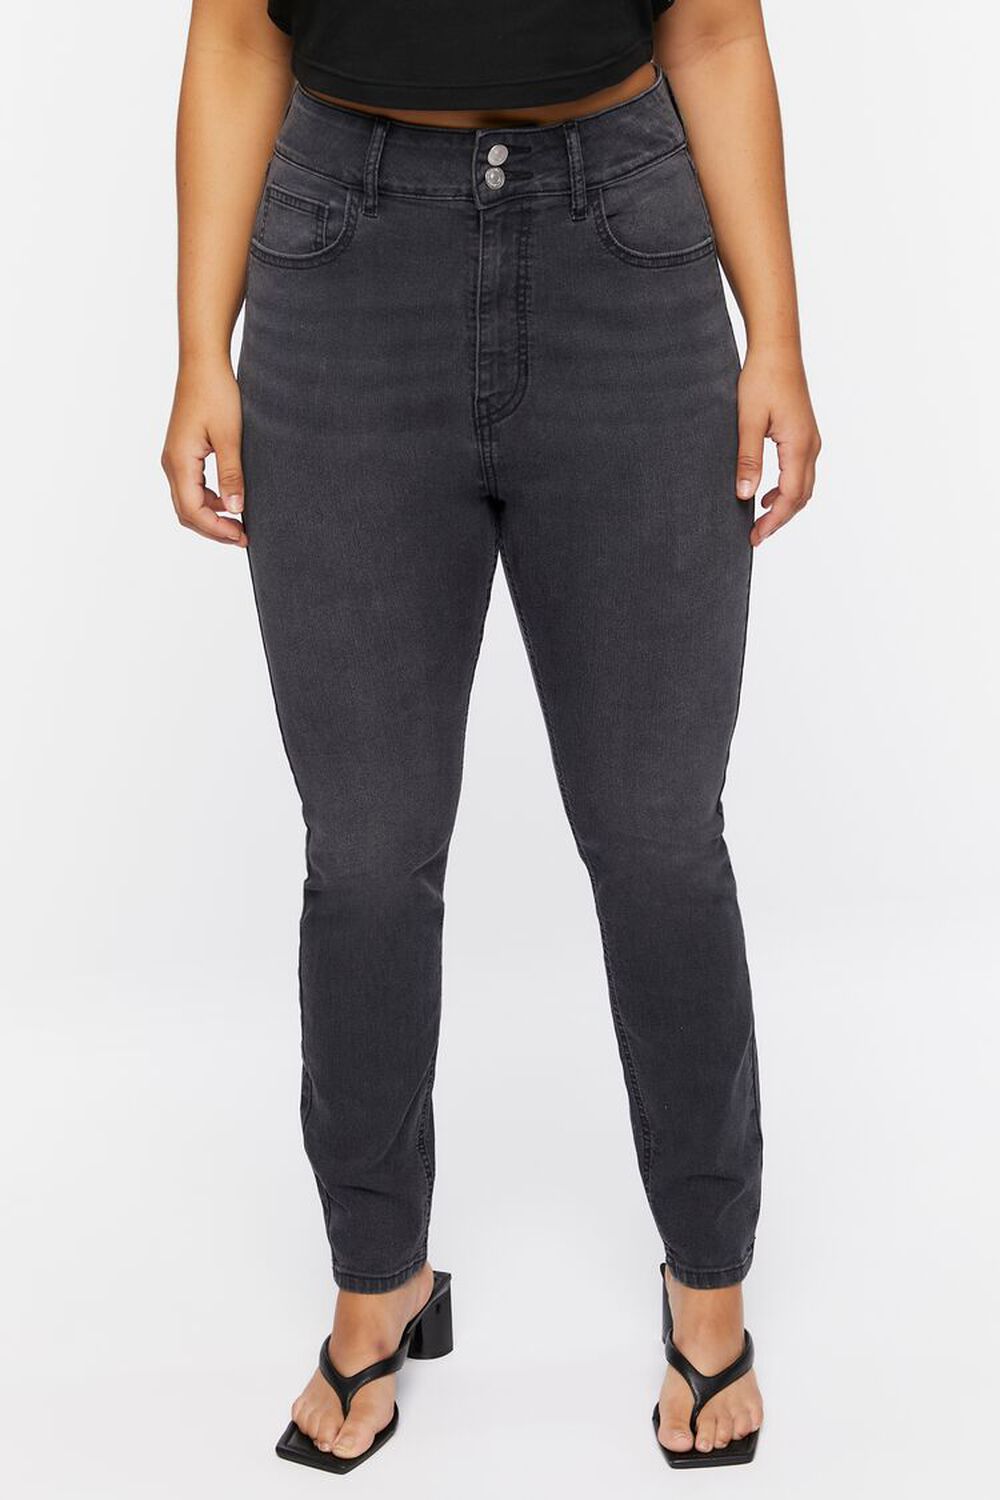 WASHED BLACK Plus Size Uplyfter Skinny Jeans, image 2